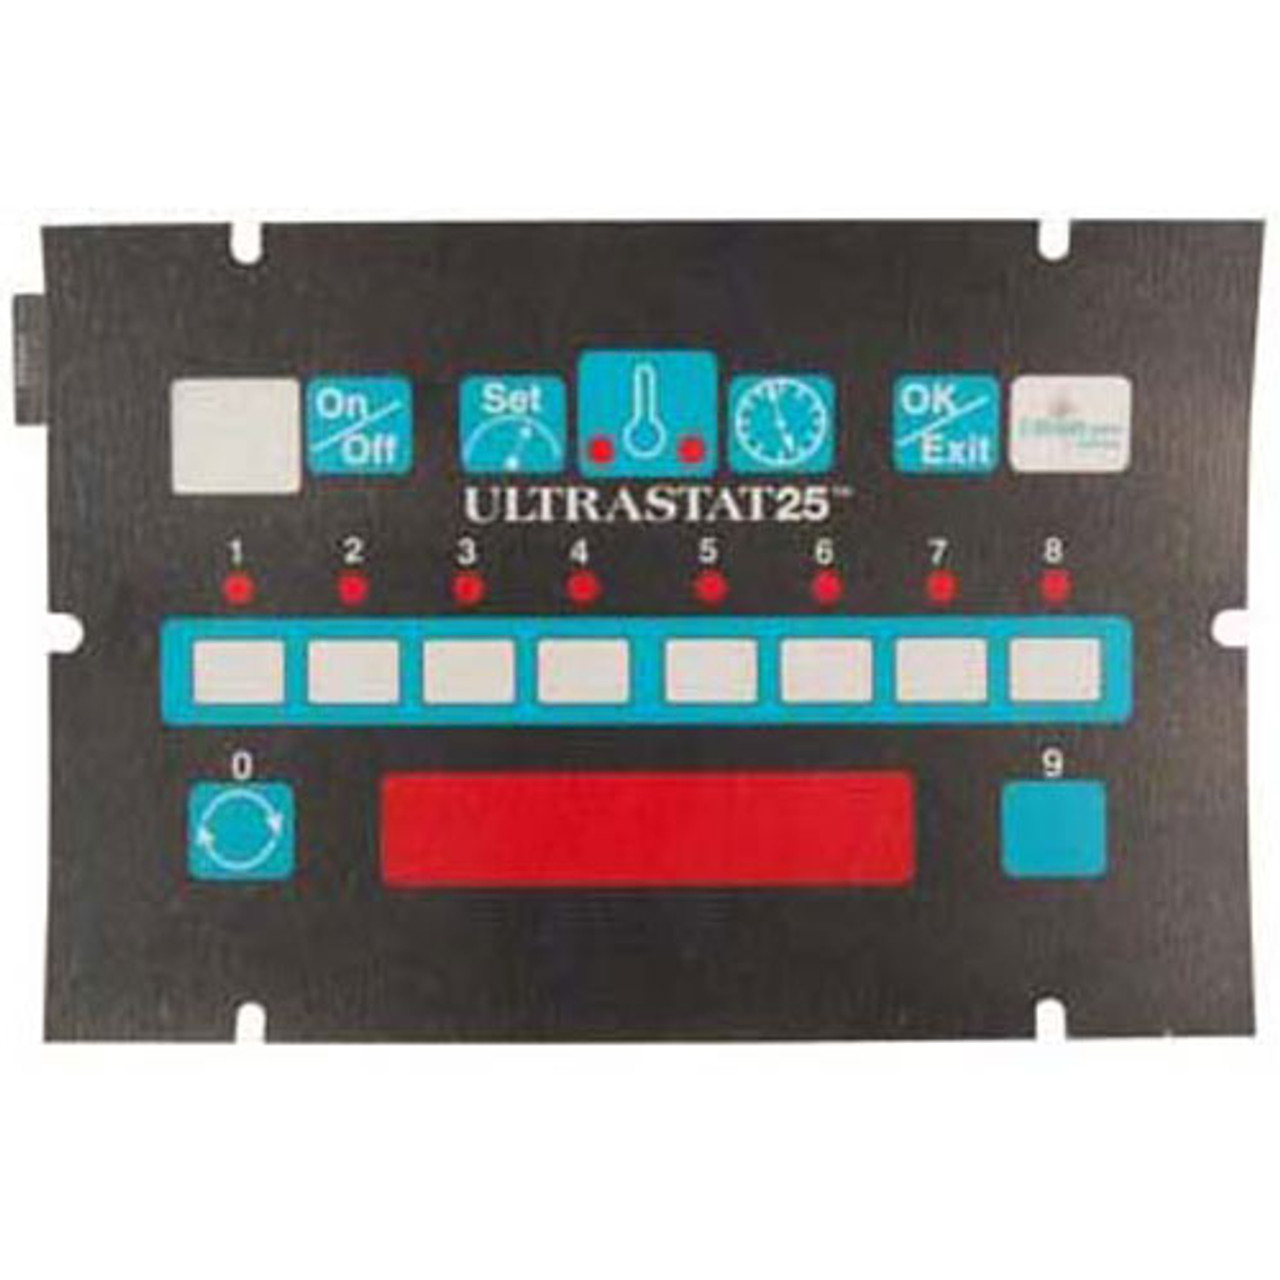 Ultrafryer ULTR22A149 - Overlay,Ultrastat 25